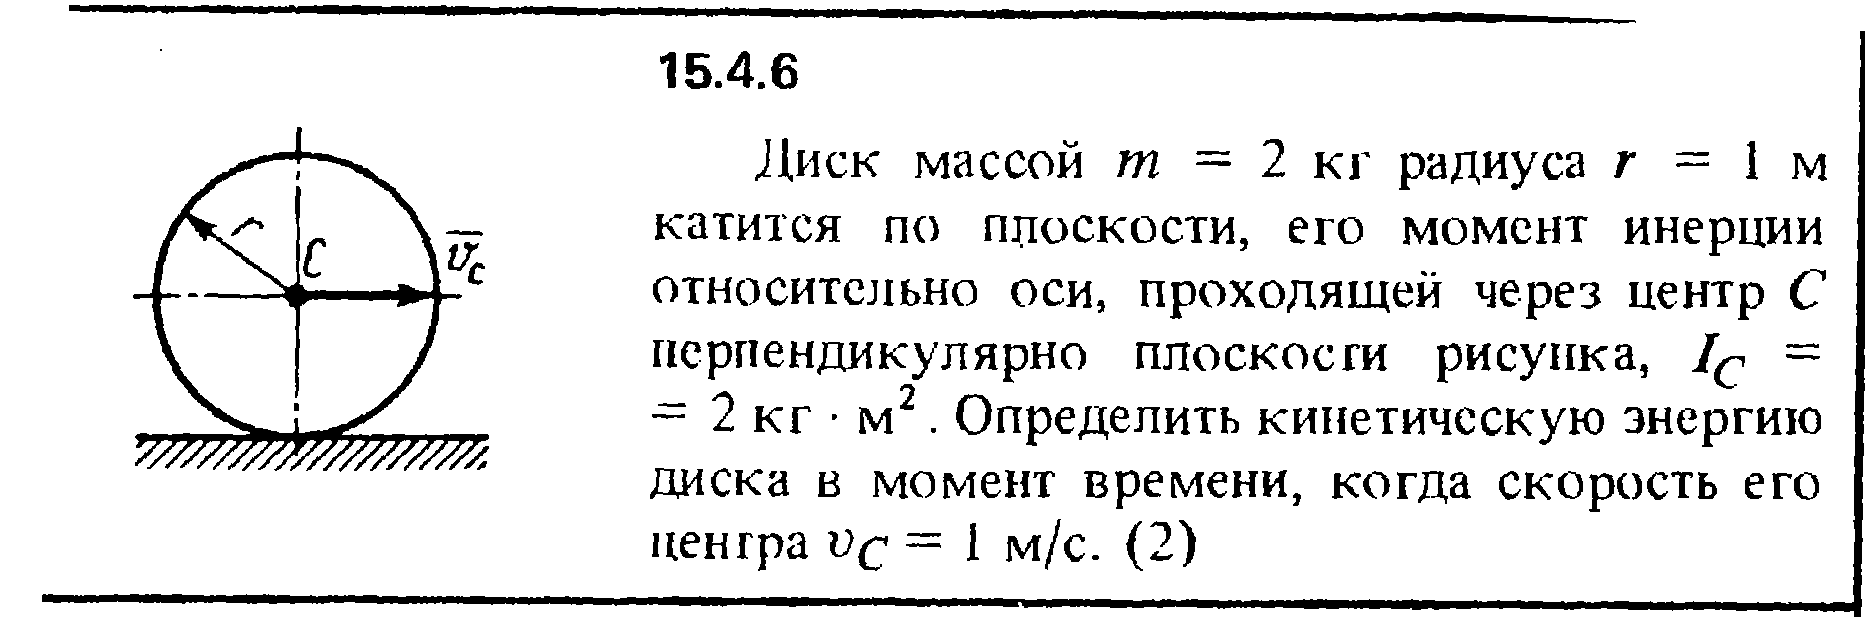 Решение задачи 15.4.6 из сборника Кепе О.Е. 1989 года